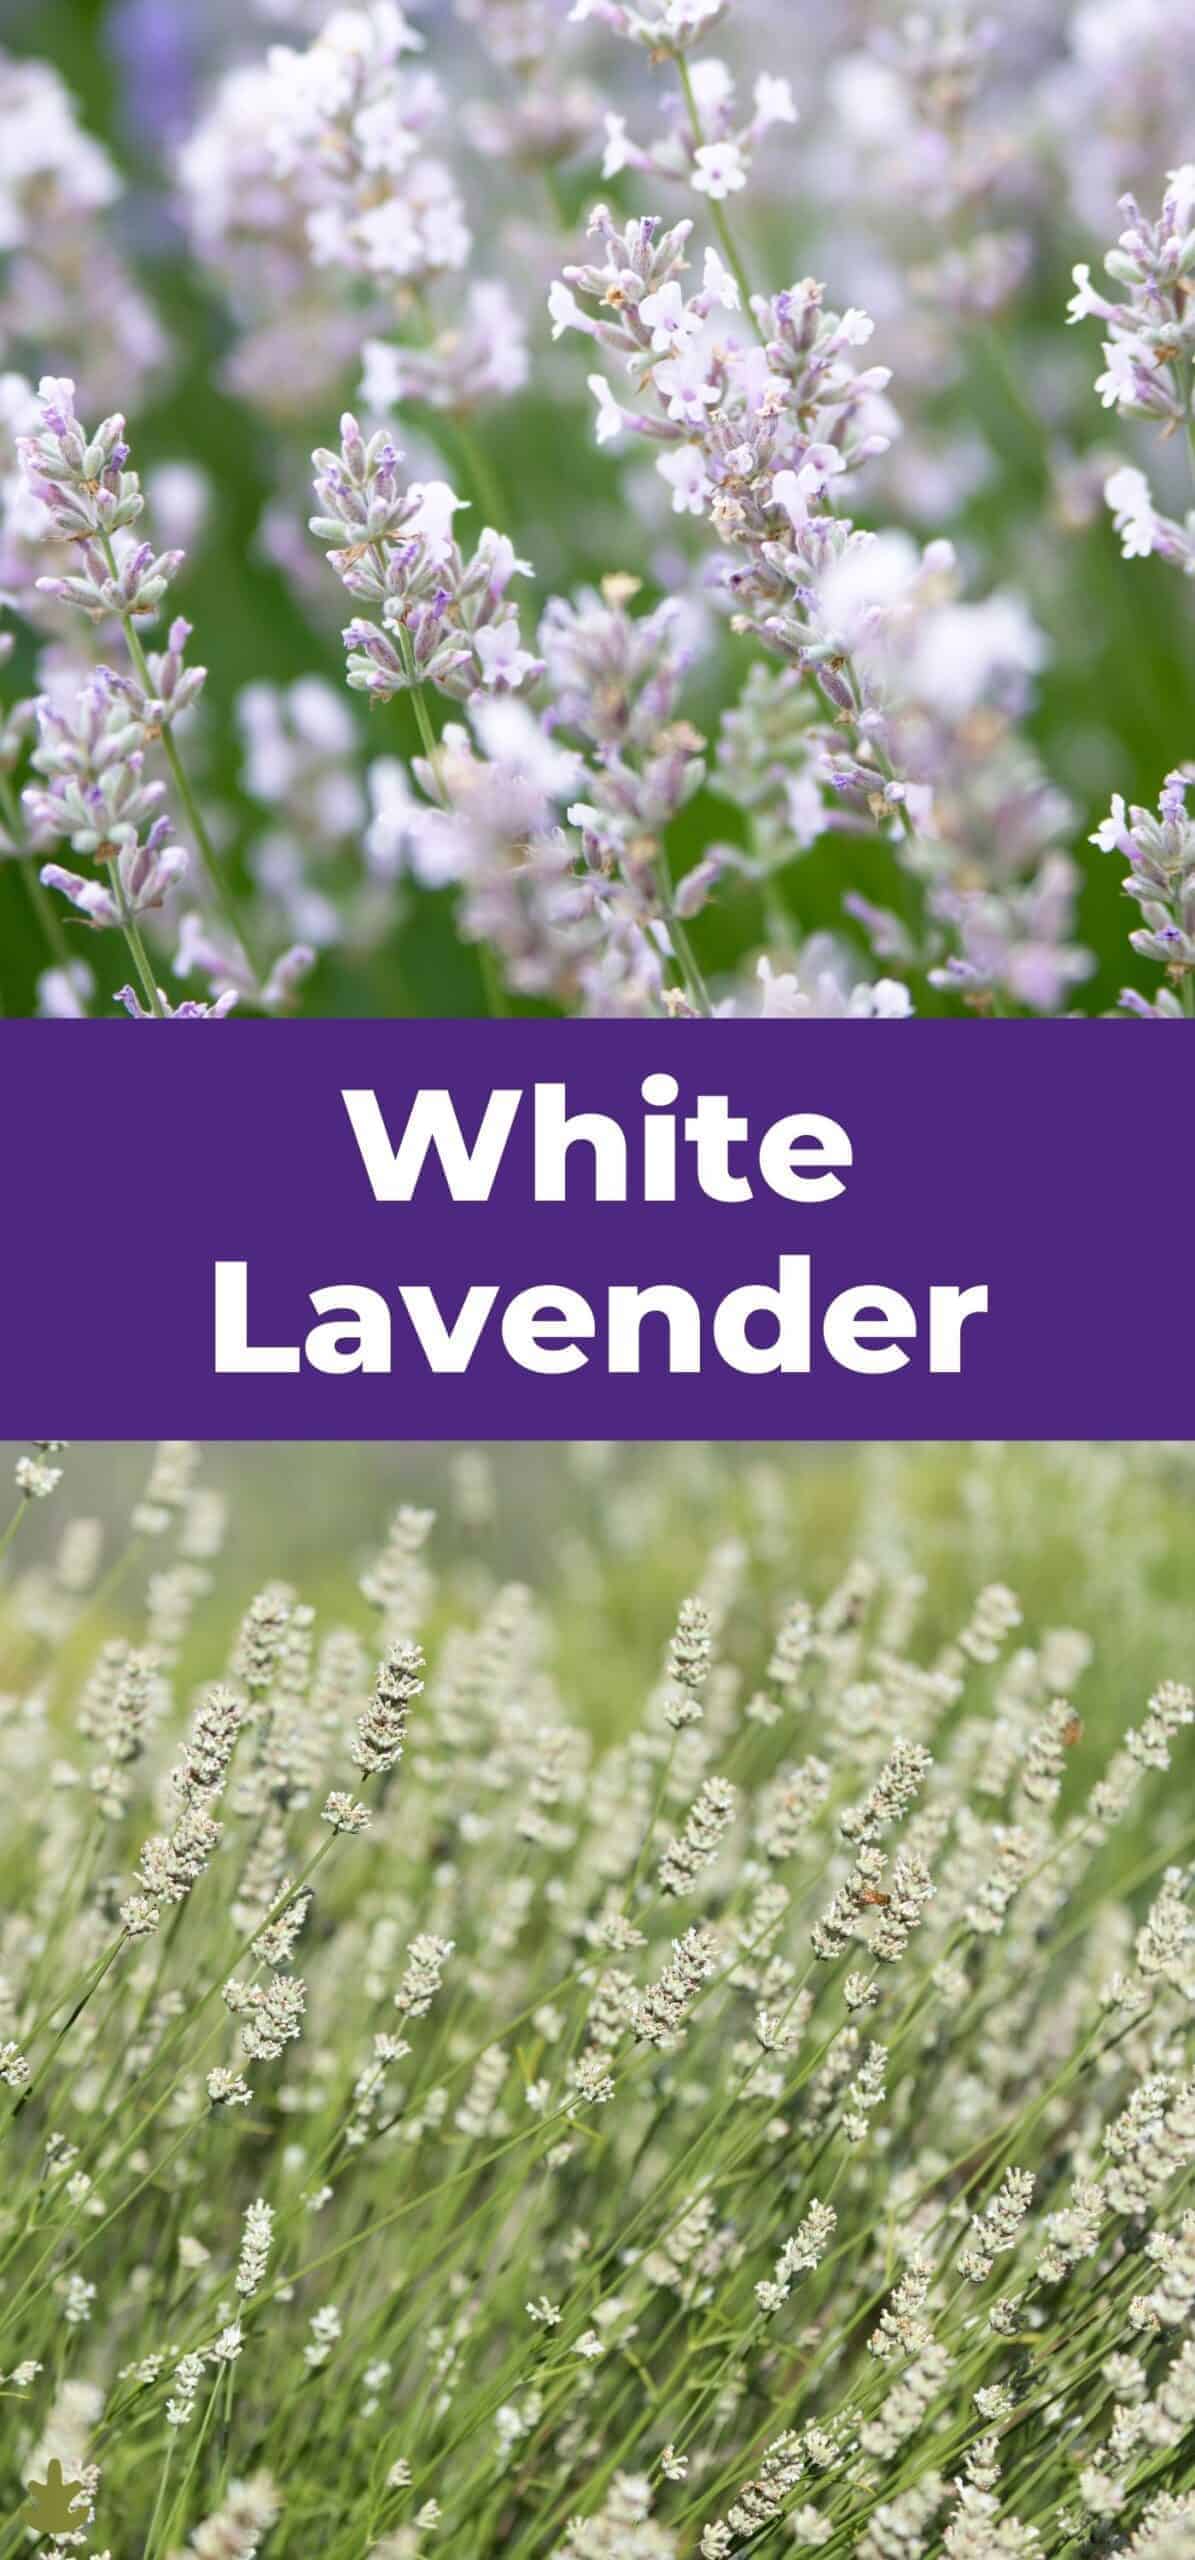 White Lavender via @home4theharvest